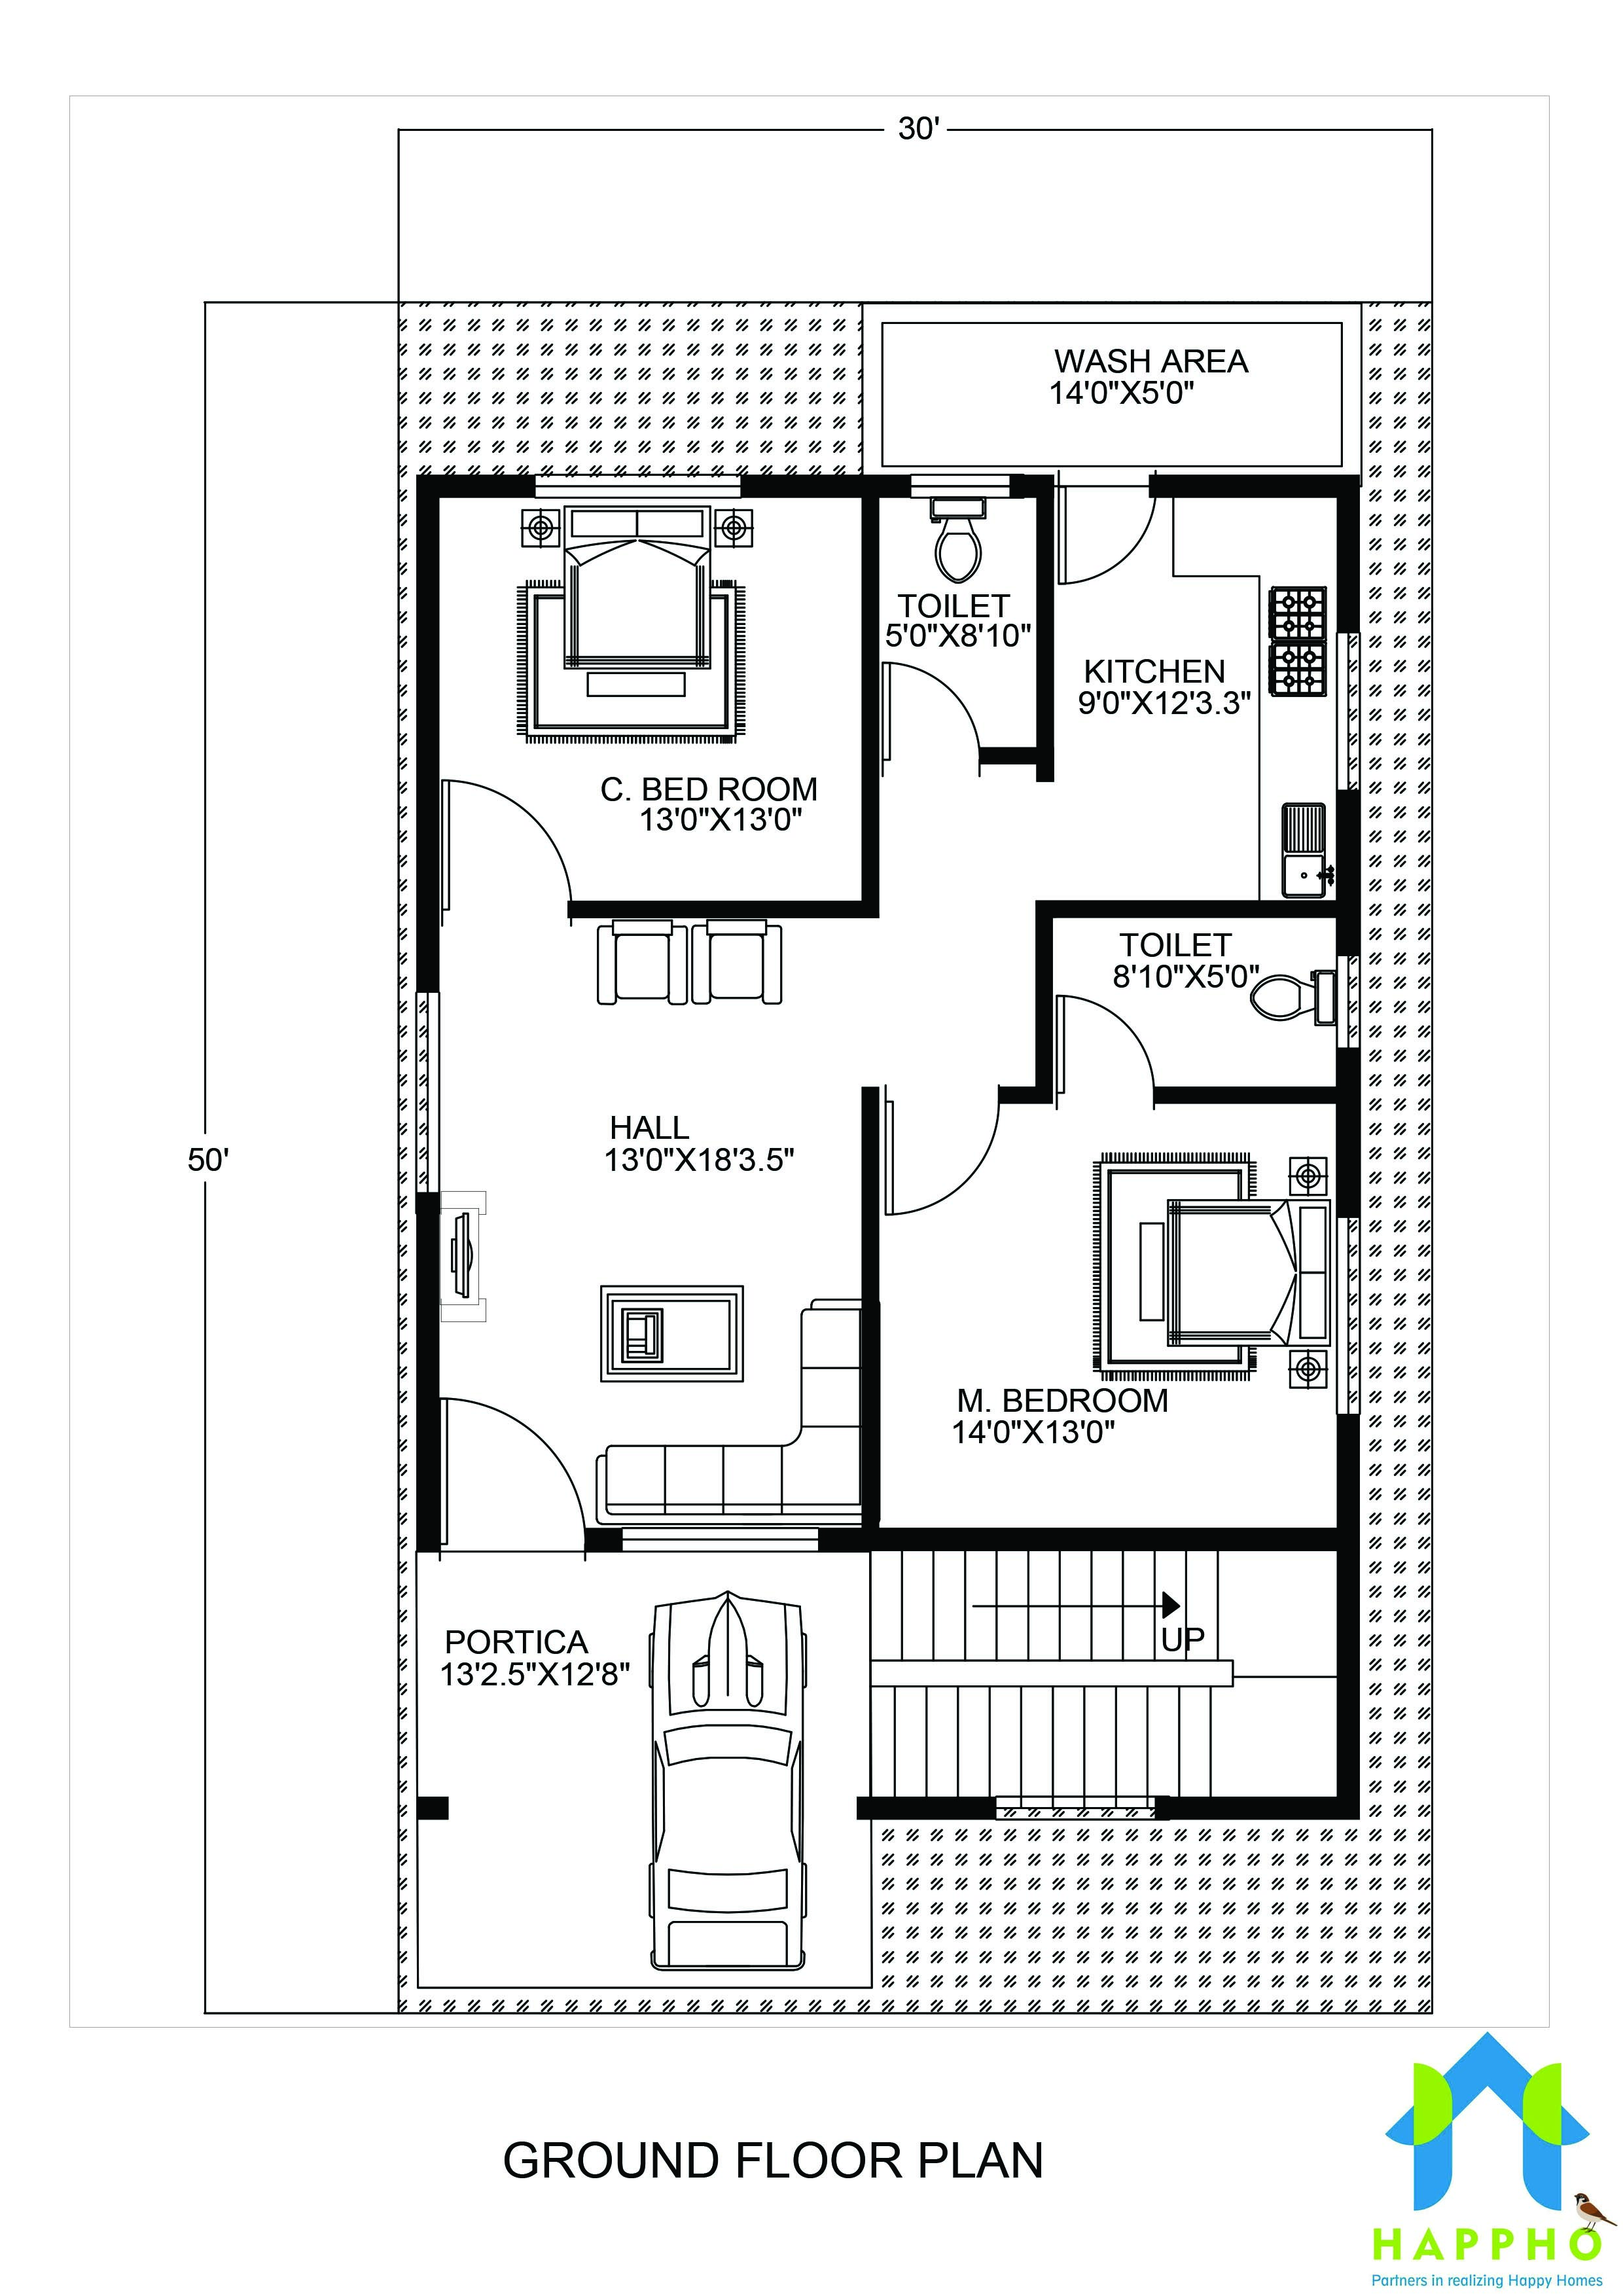 Floor Plan for 30 X 50 Feet plot 2BHK (1500 Square Feet